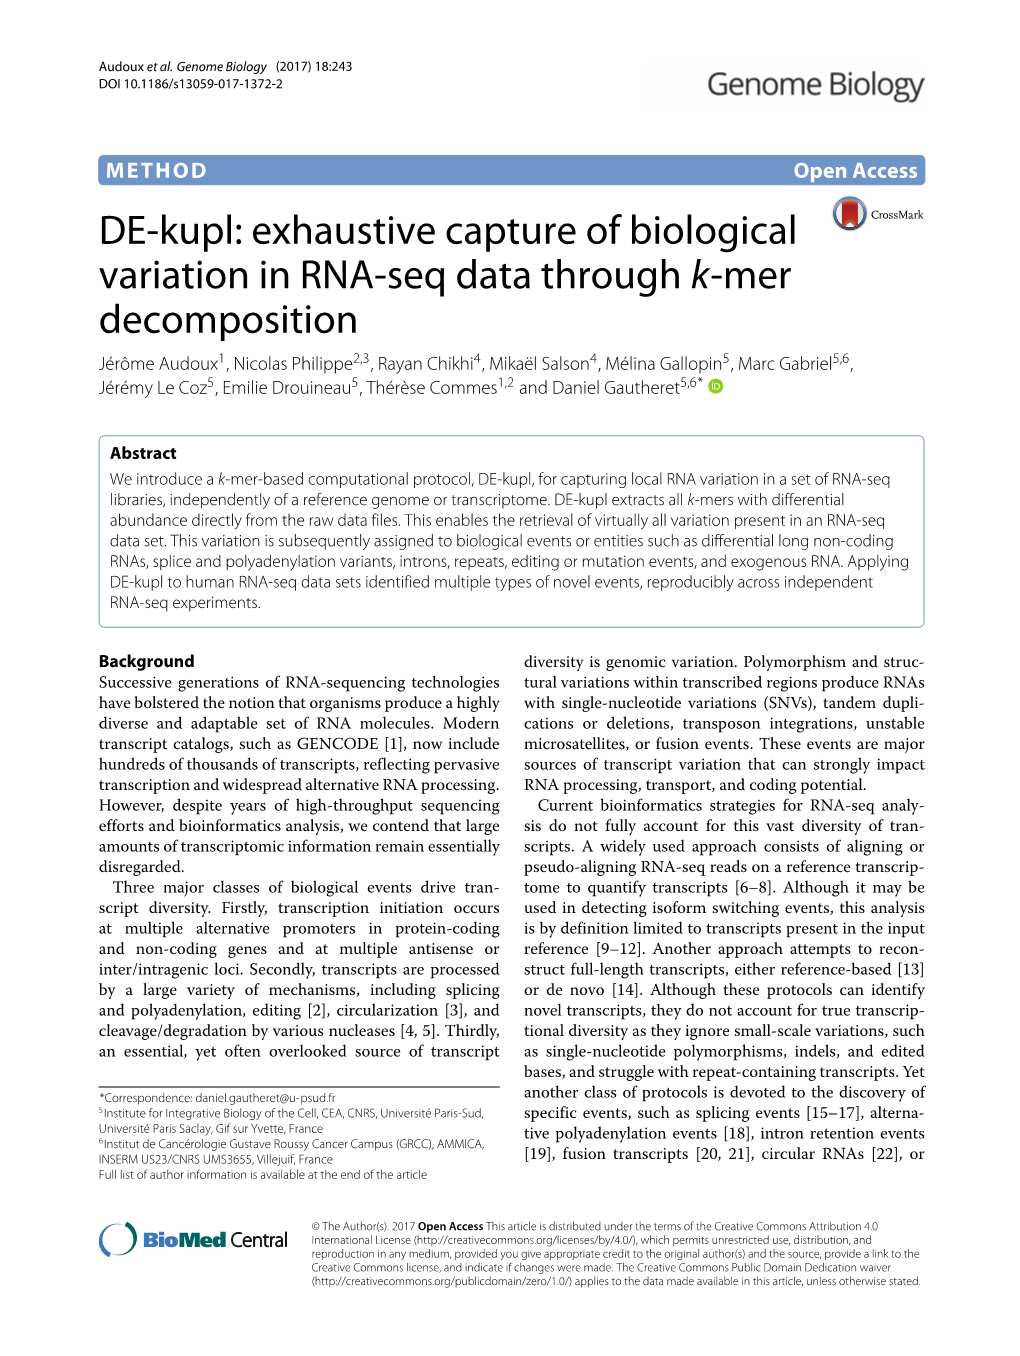 DE-Kupl: Exhaustive Capture of Biological Variation in RNA-Seq Data Through K-Mer Decomposition